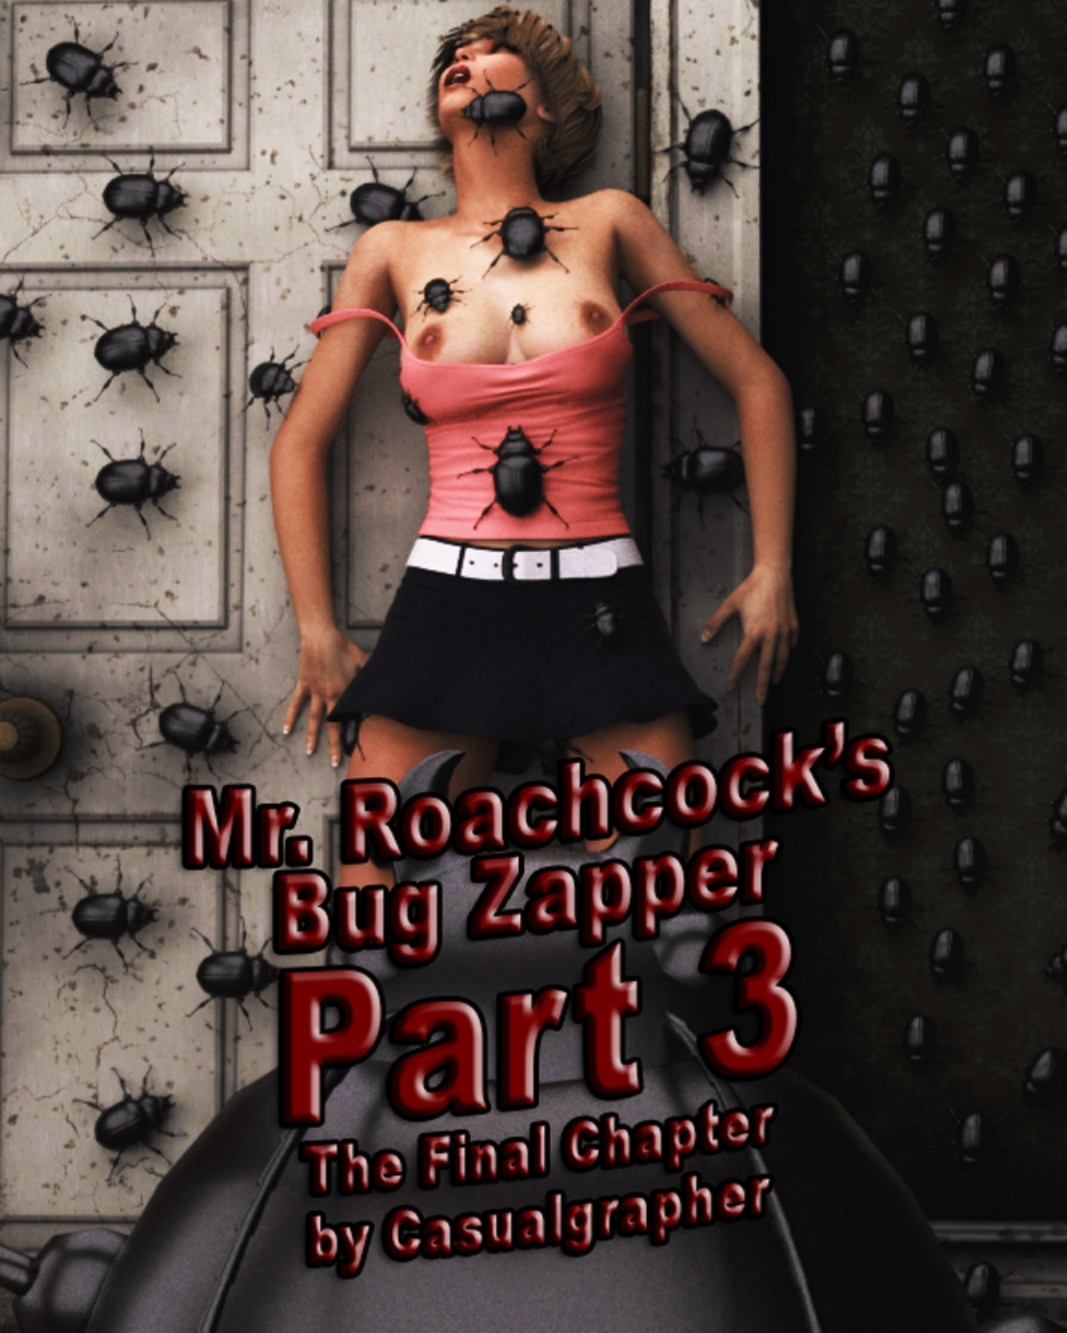 (Casgra) Mr. Roachcock's Bug Zapper (Part 3) (English) 0